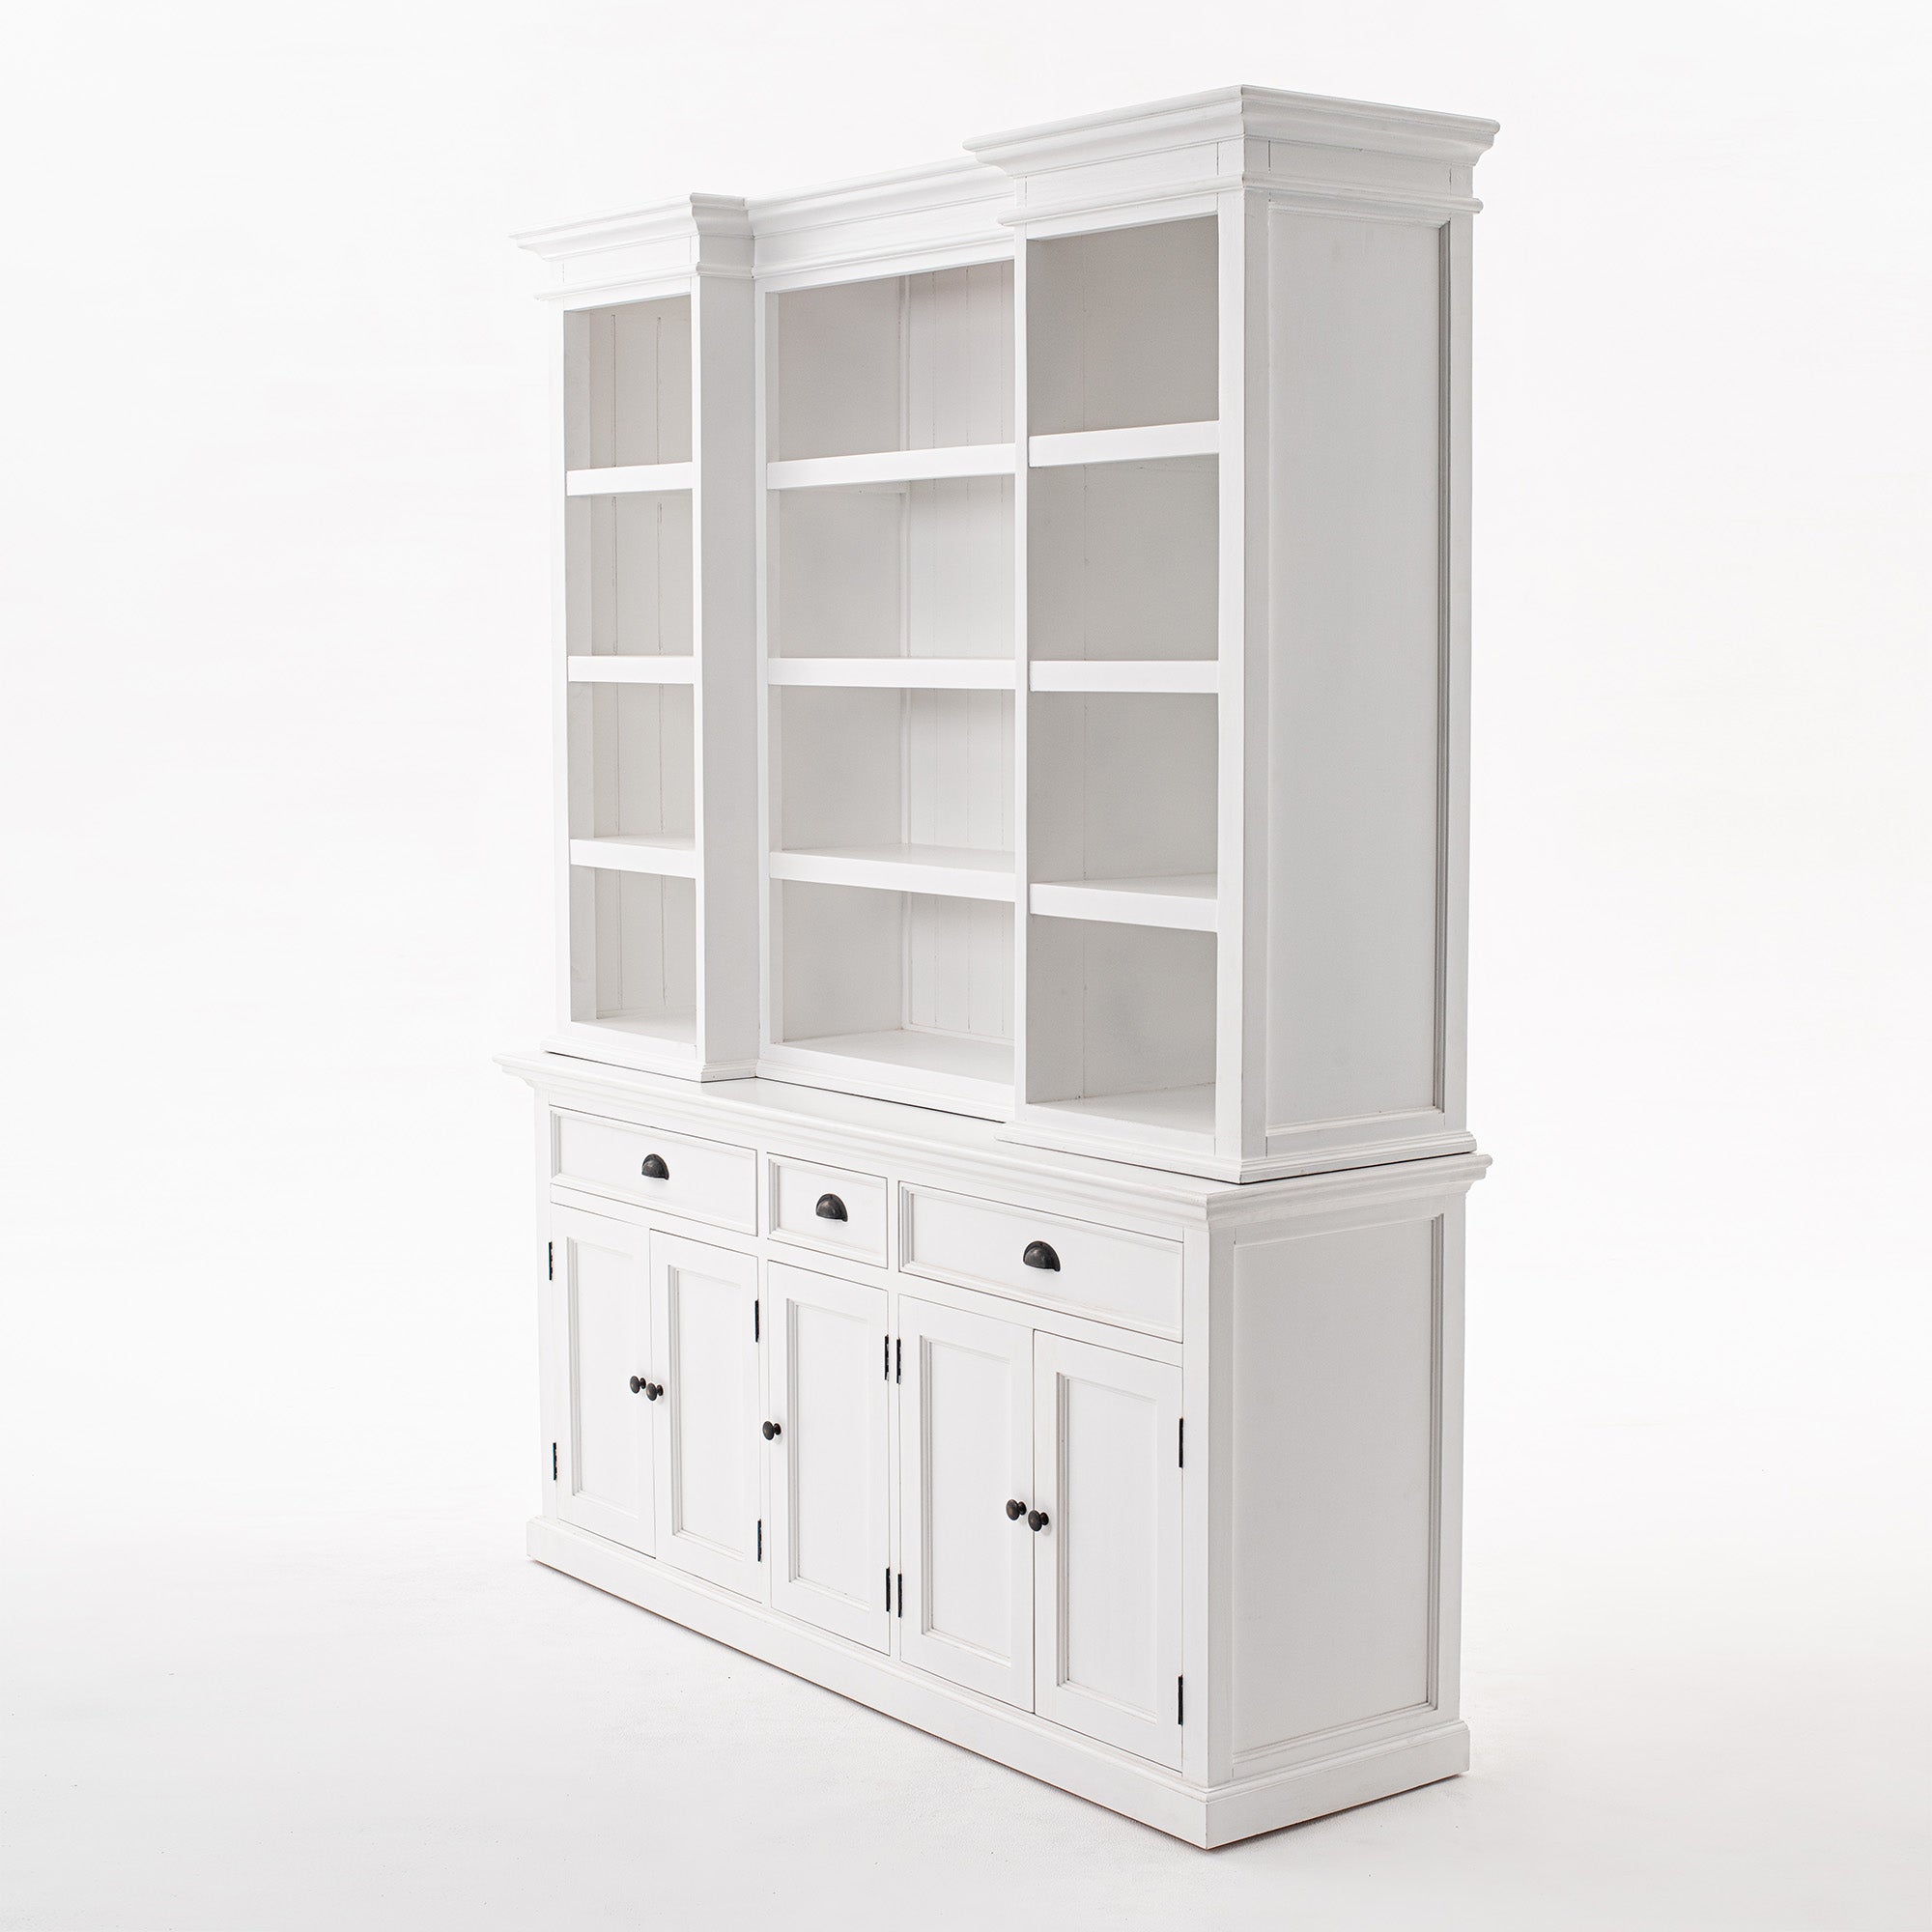 Halifax Coastal White Kitchen Hutch Cabinet with 5 Doors 3 Drawers